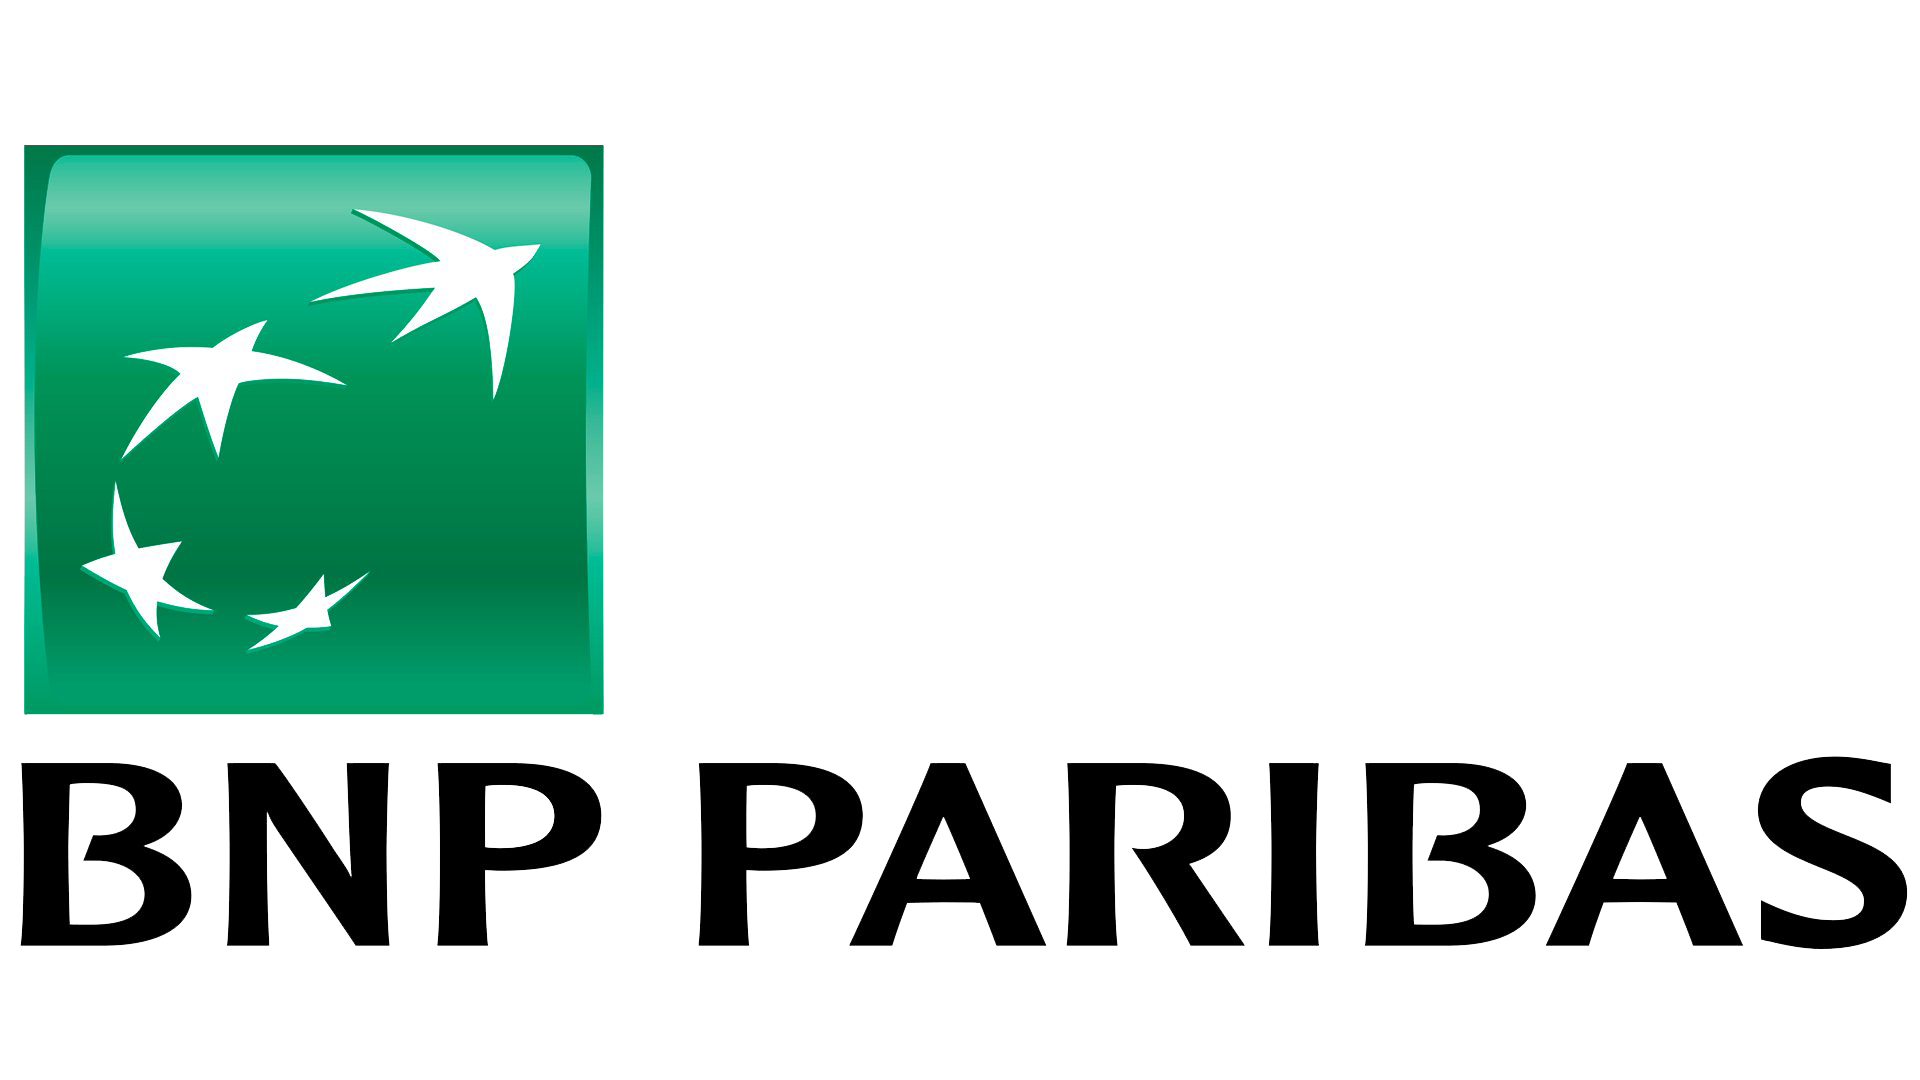 BNP Paribas Logo Background PNG Image